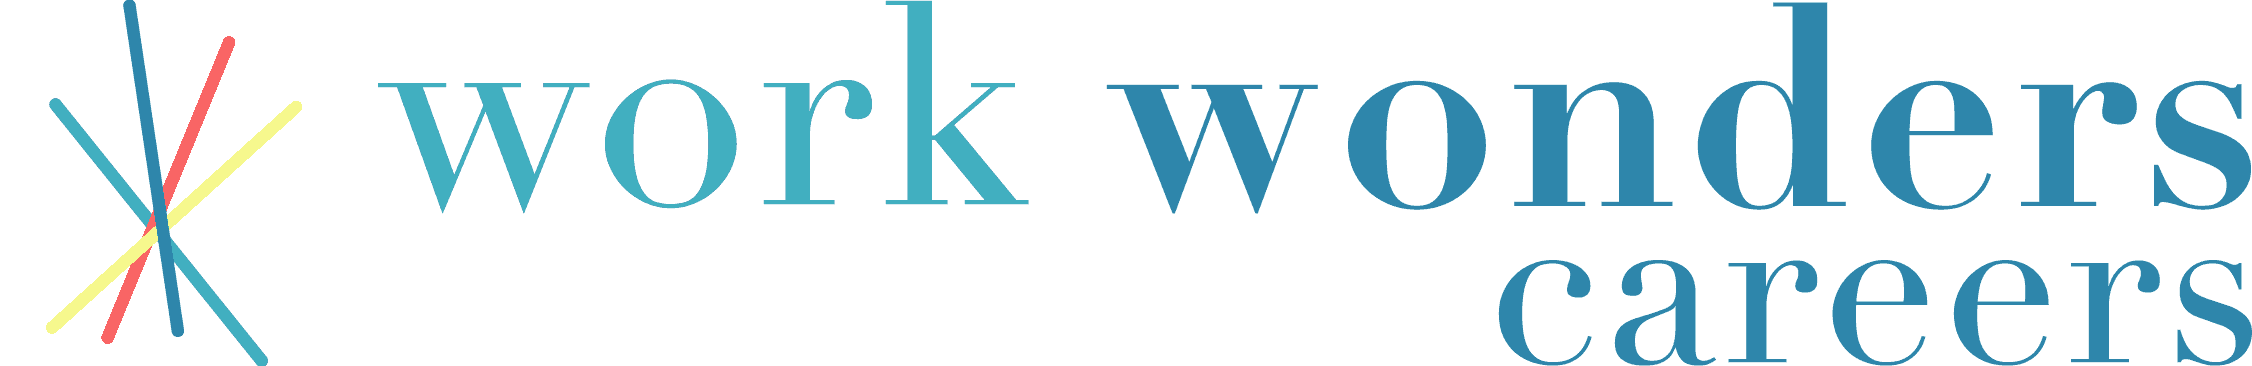 WW-Main-Logo-Alternate.png